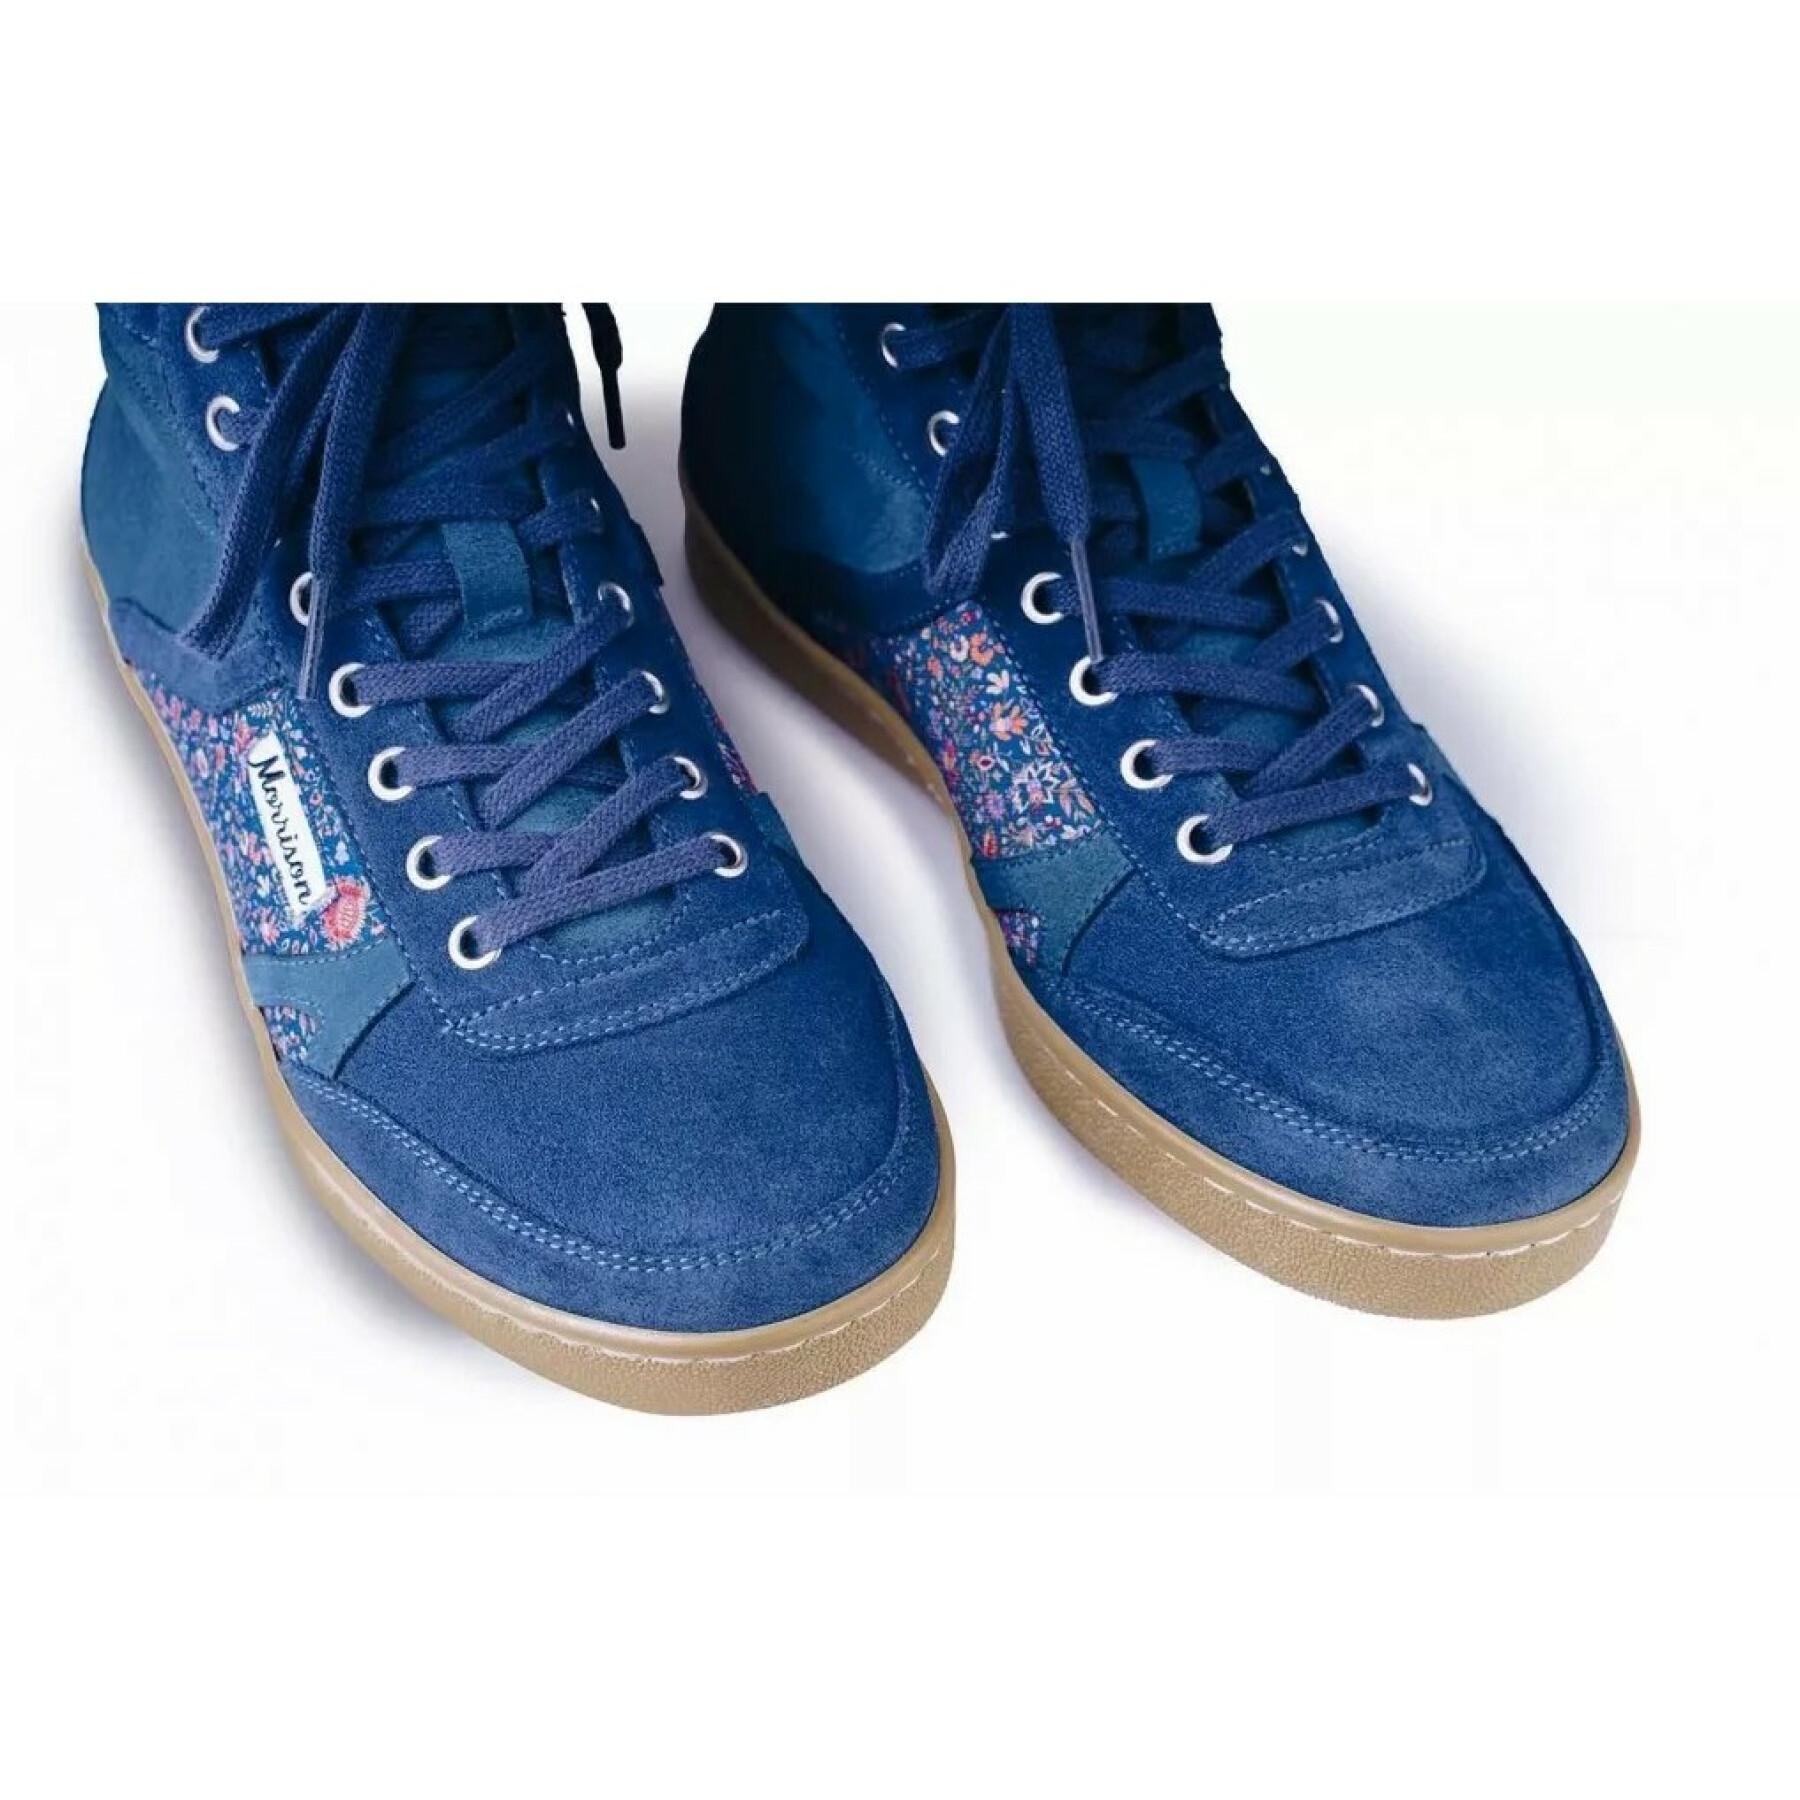 Stiefeletten Morrison Shoes Navy blue